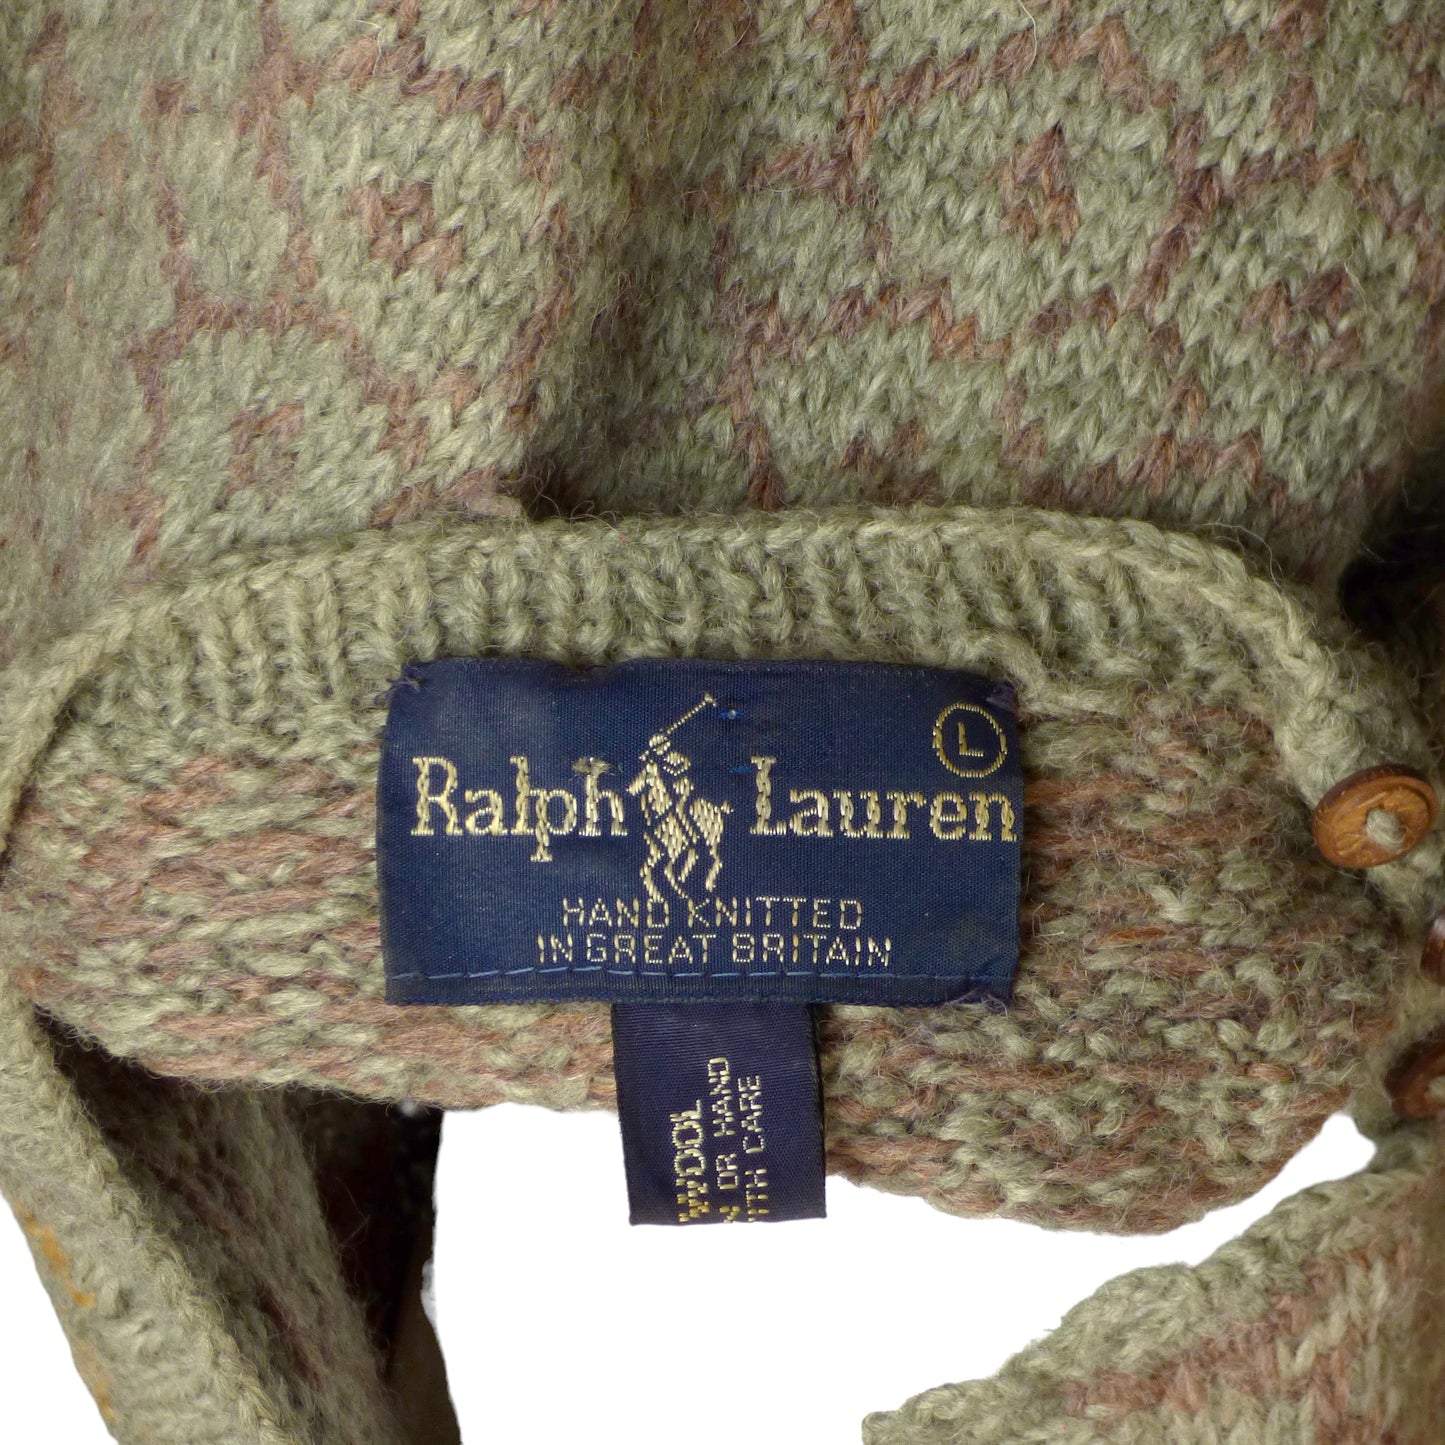 RALPH LAUREN- 1980s Wool Print Sweater, Size Large